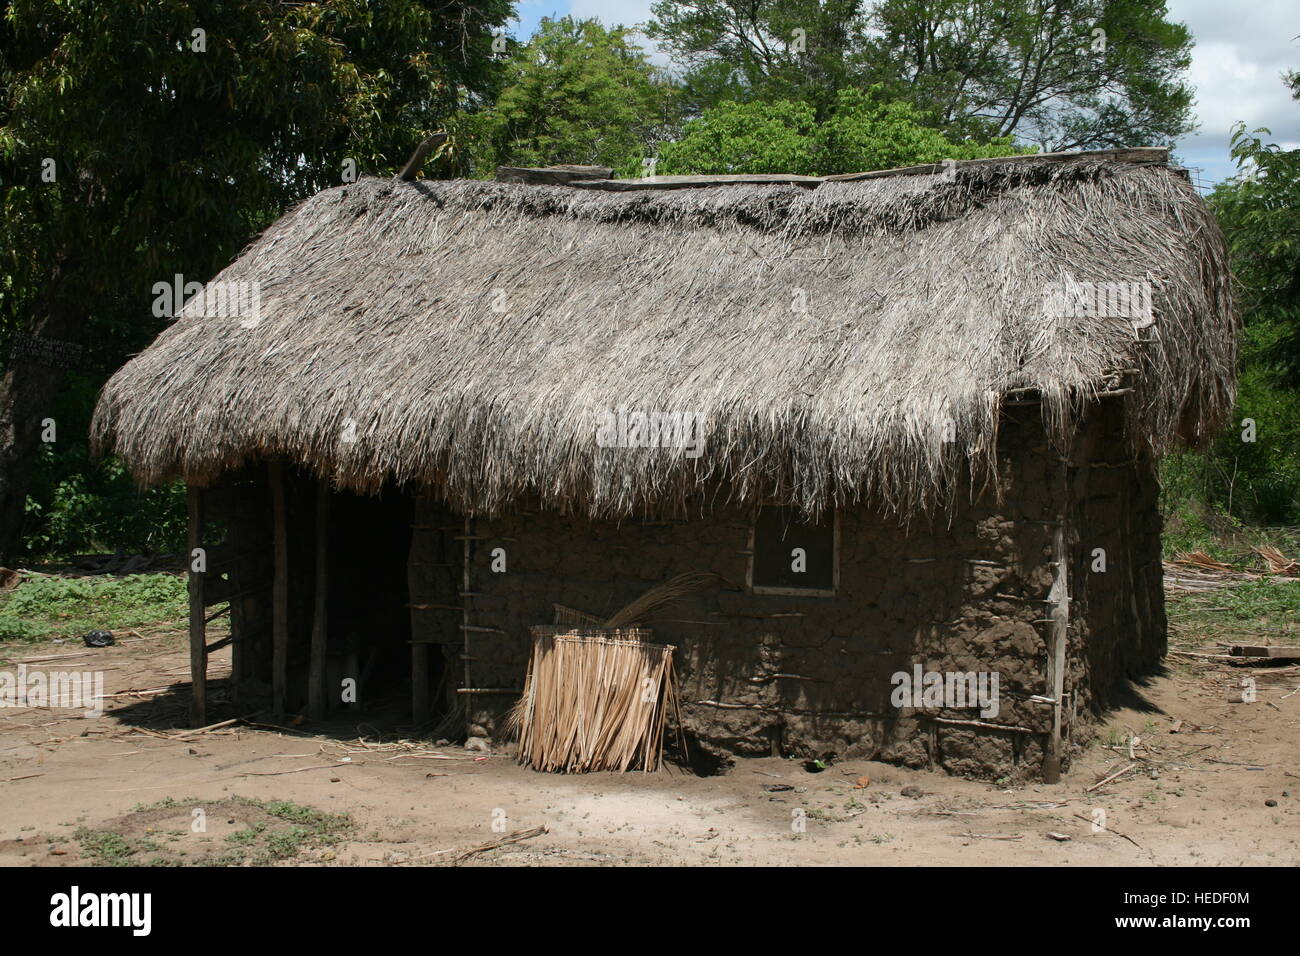 Mkoko borgo agricolo, Tanzania africa Foto Stock